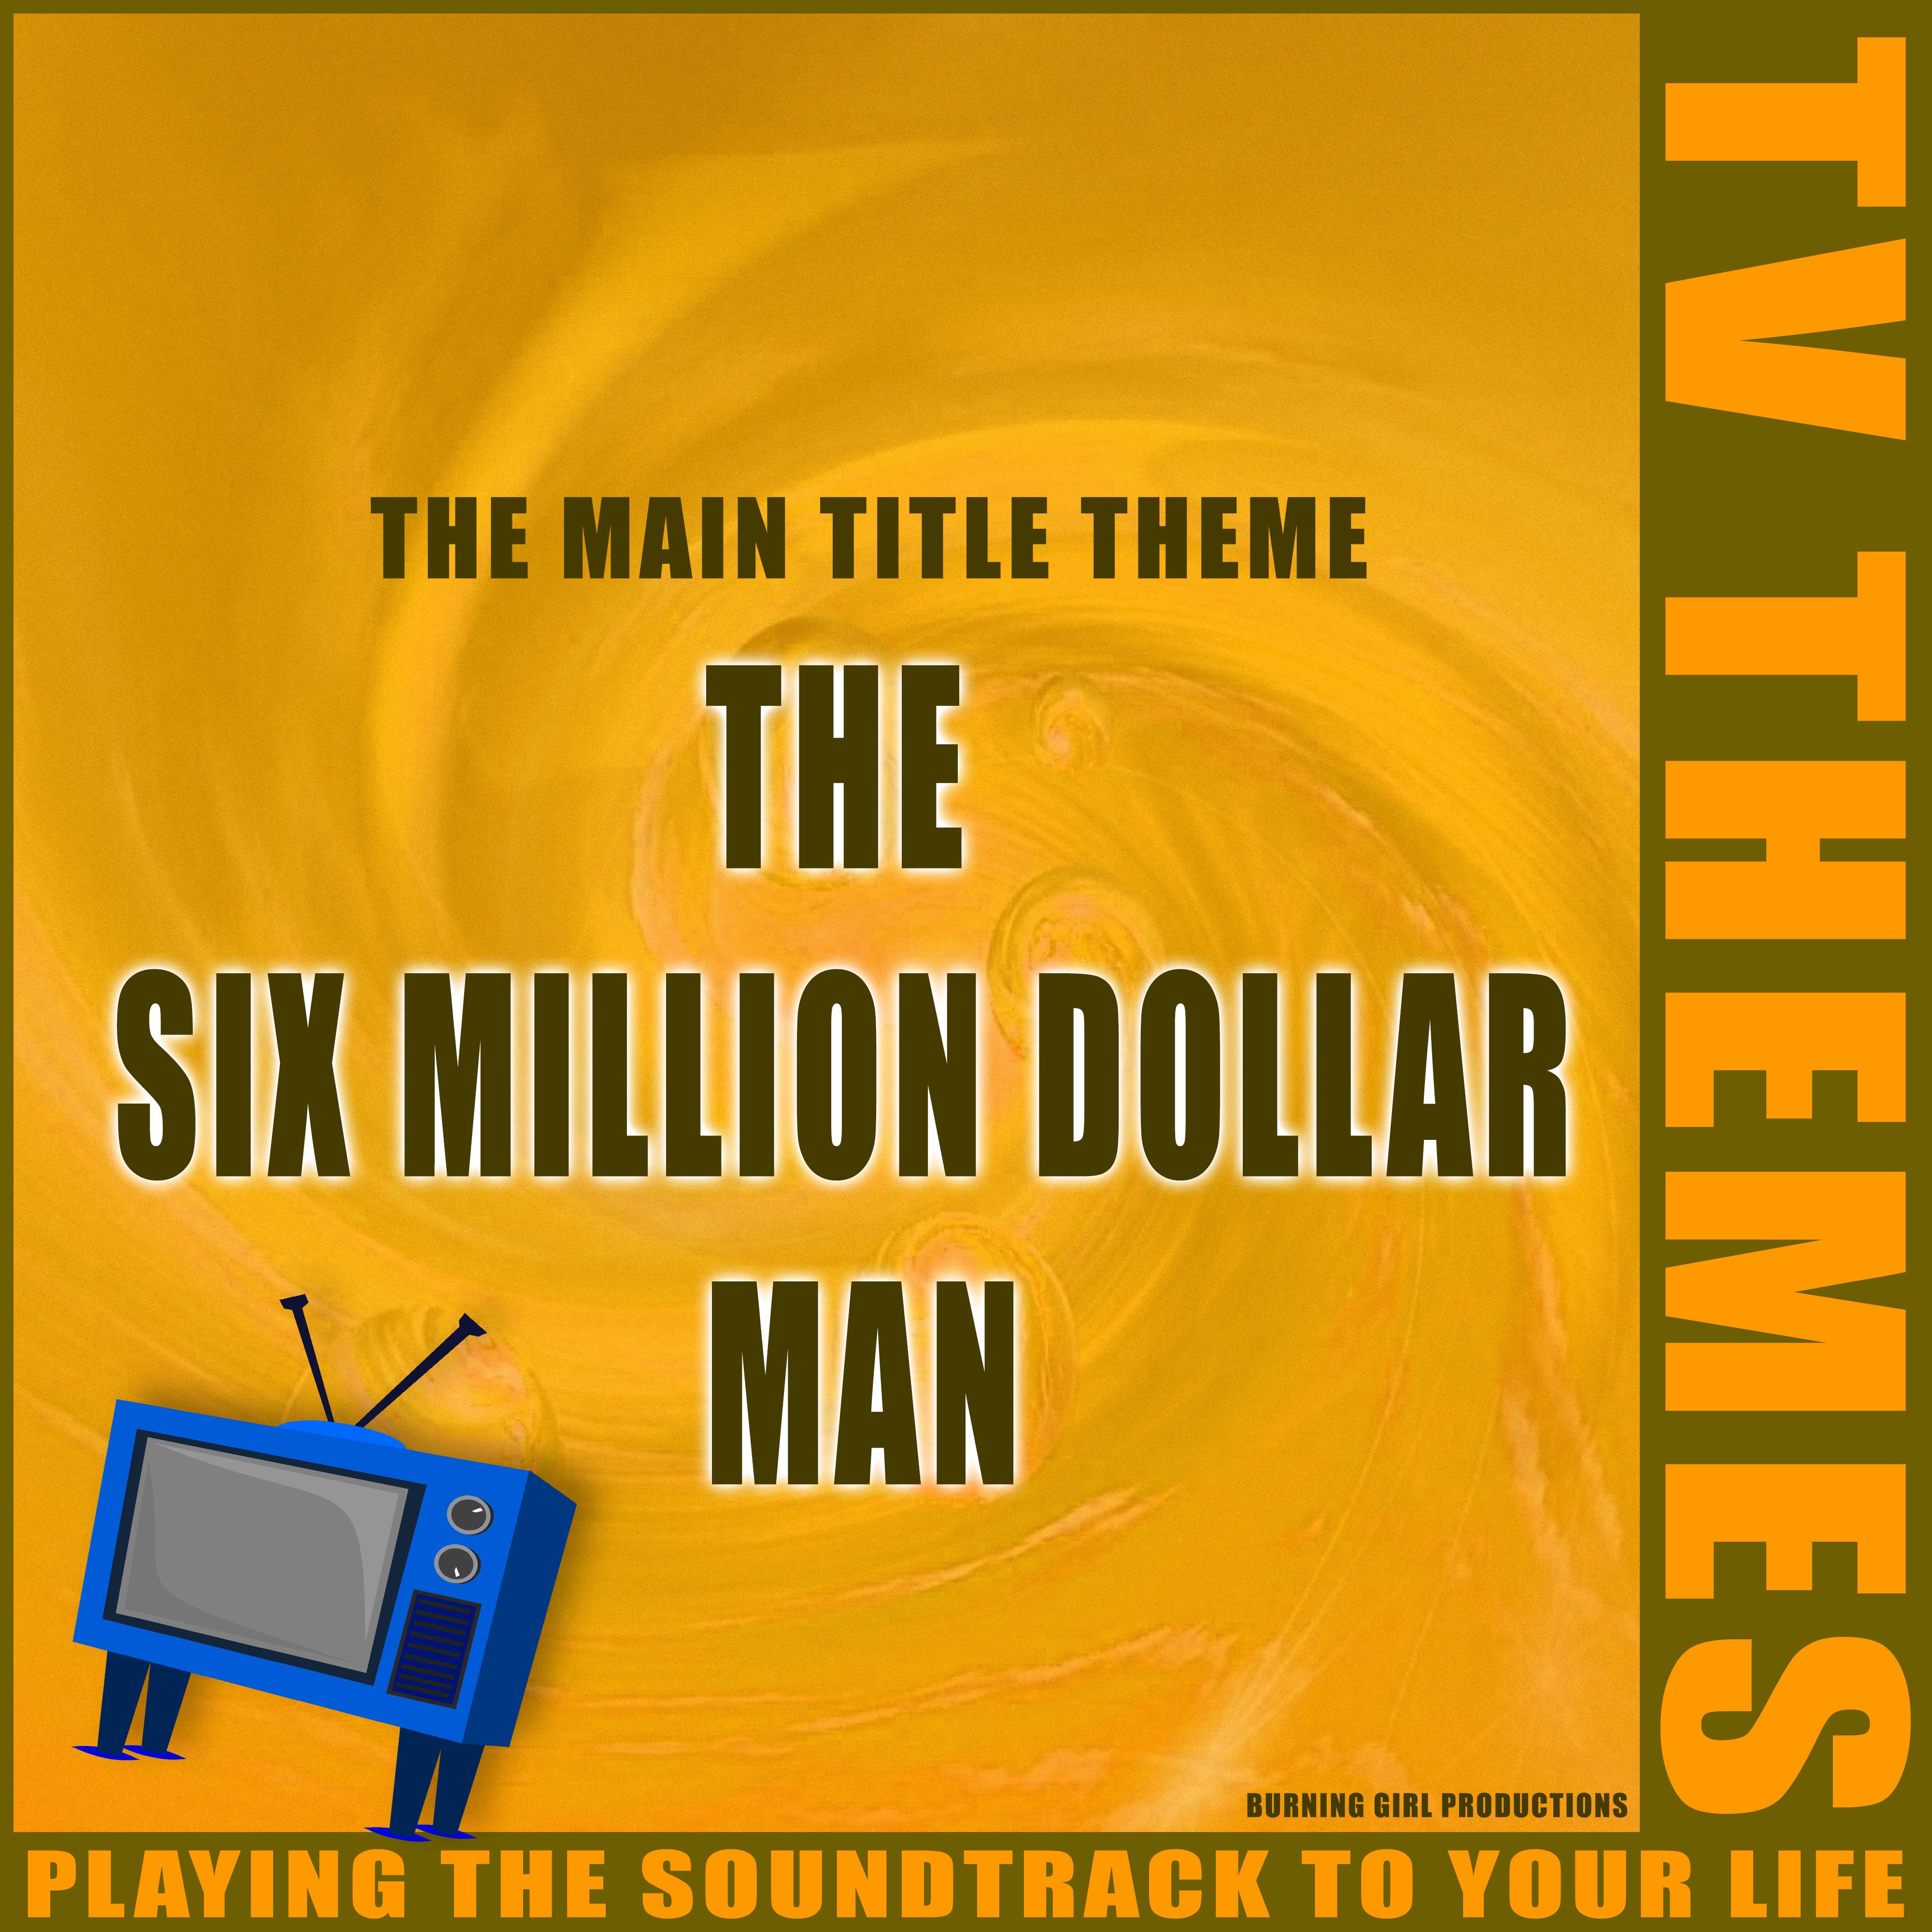 The Main Title Theme - The Six Million Dollar Man